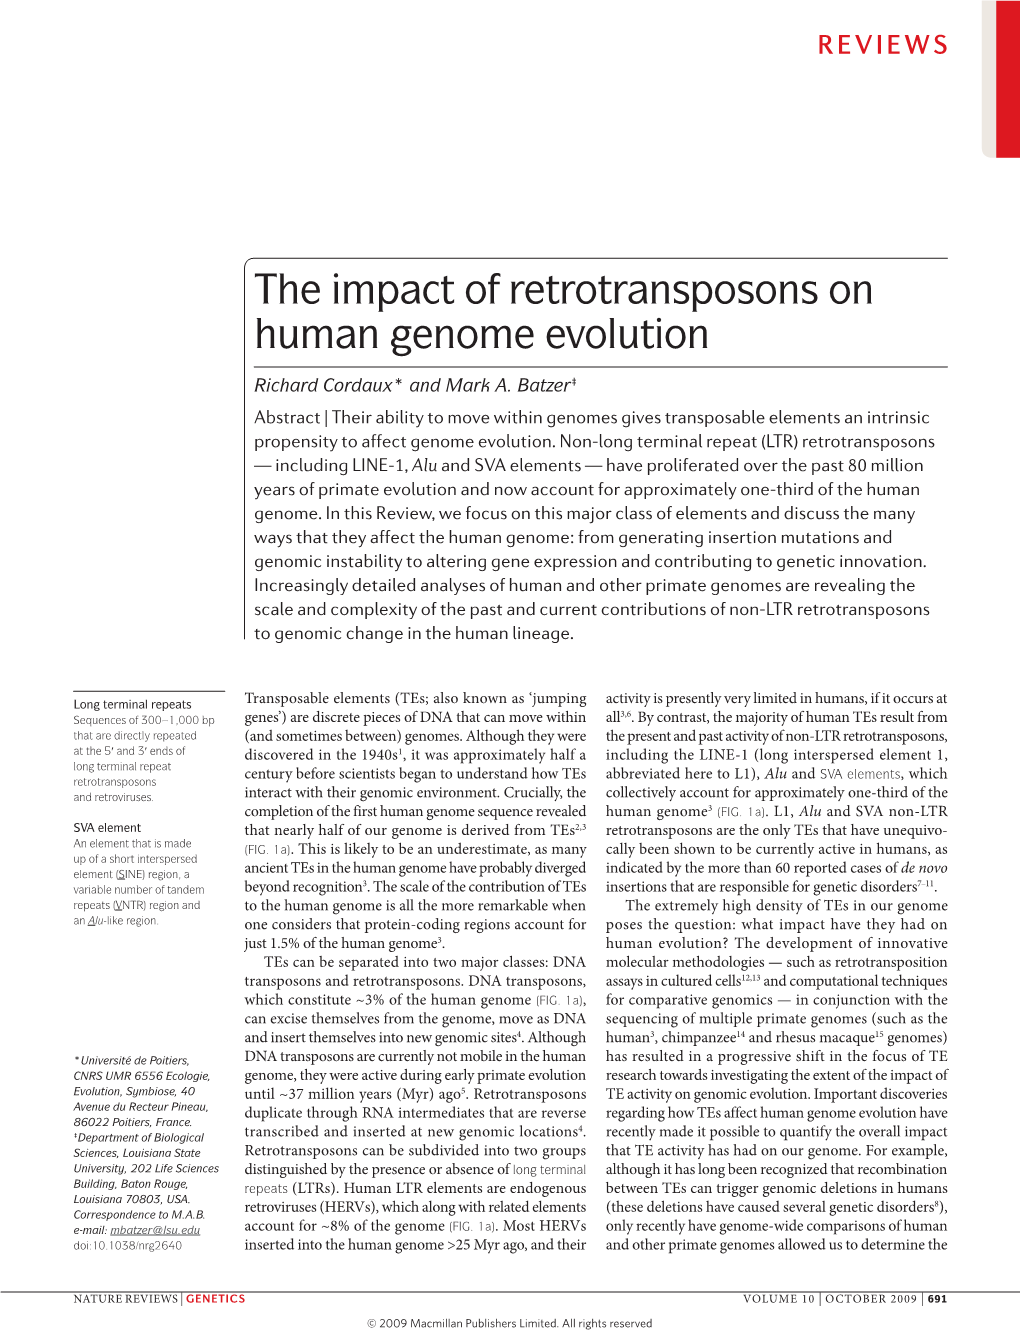 The Impact of Retrotransposons on Human Genome Evolution